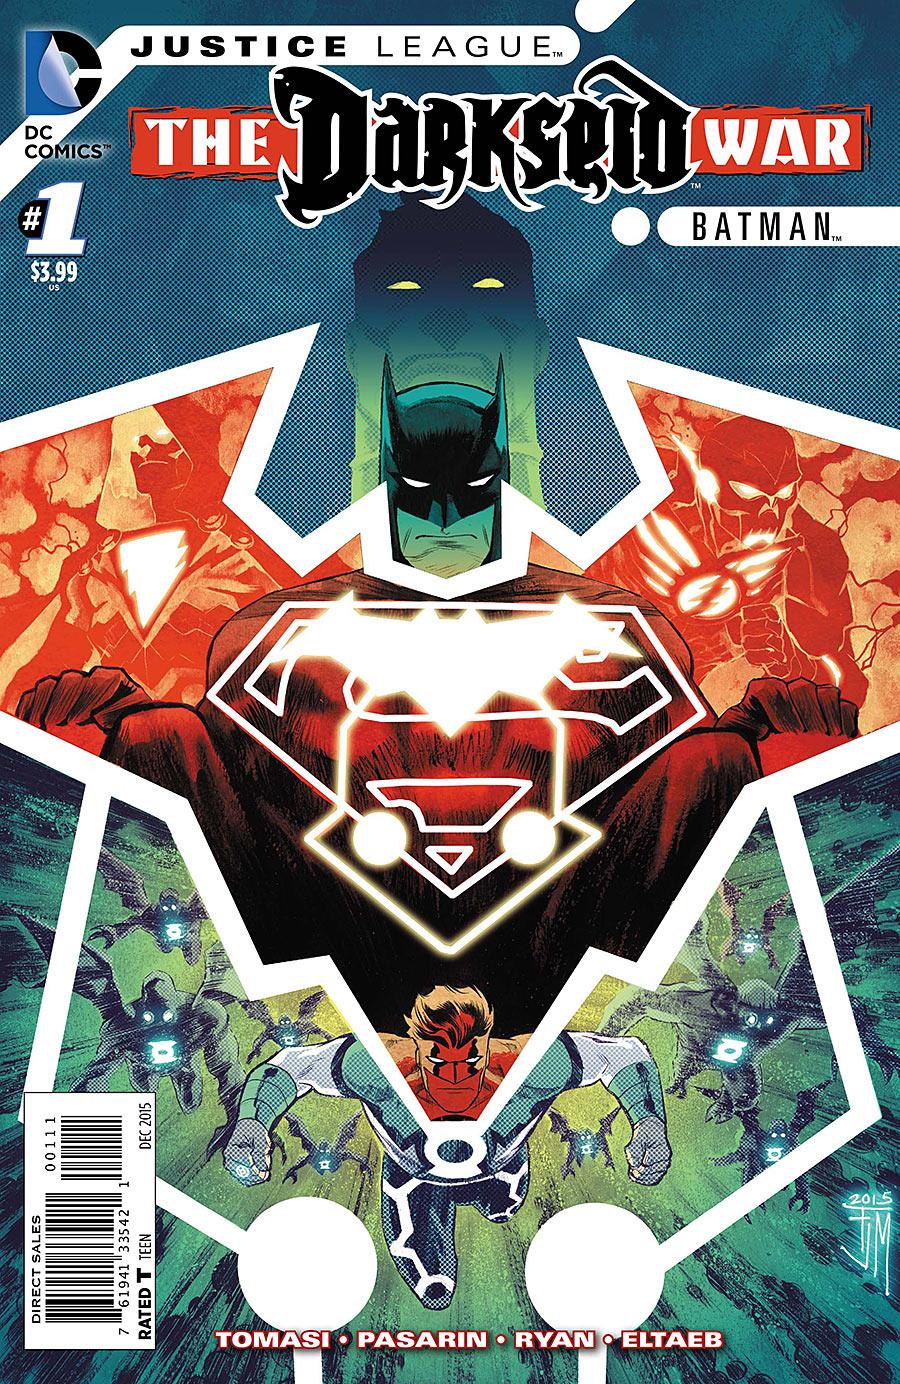 Justice League: Darkseid War: Batman Vol. 1 #1